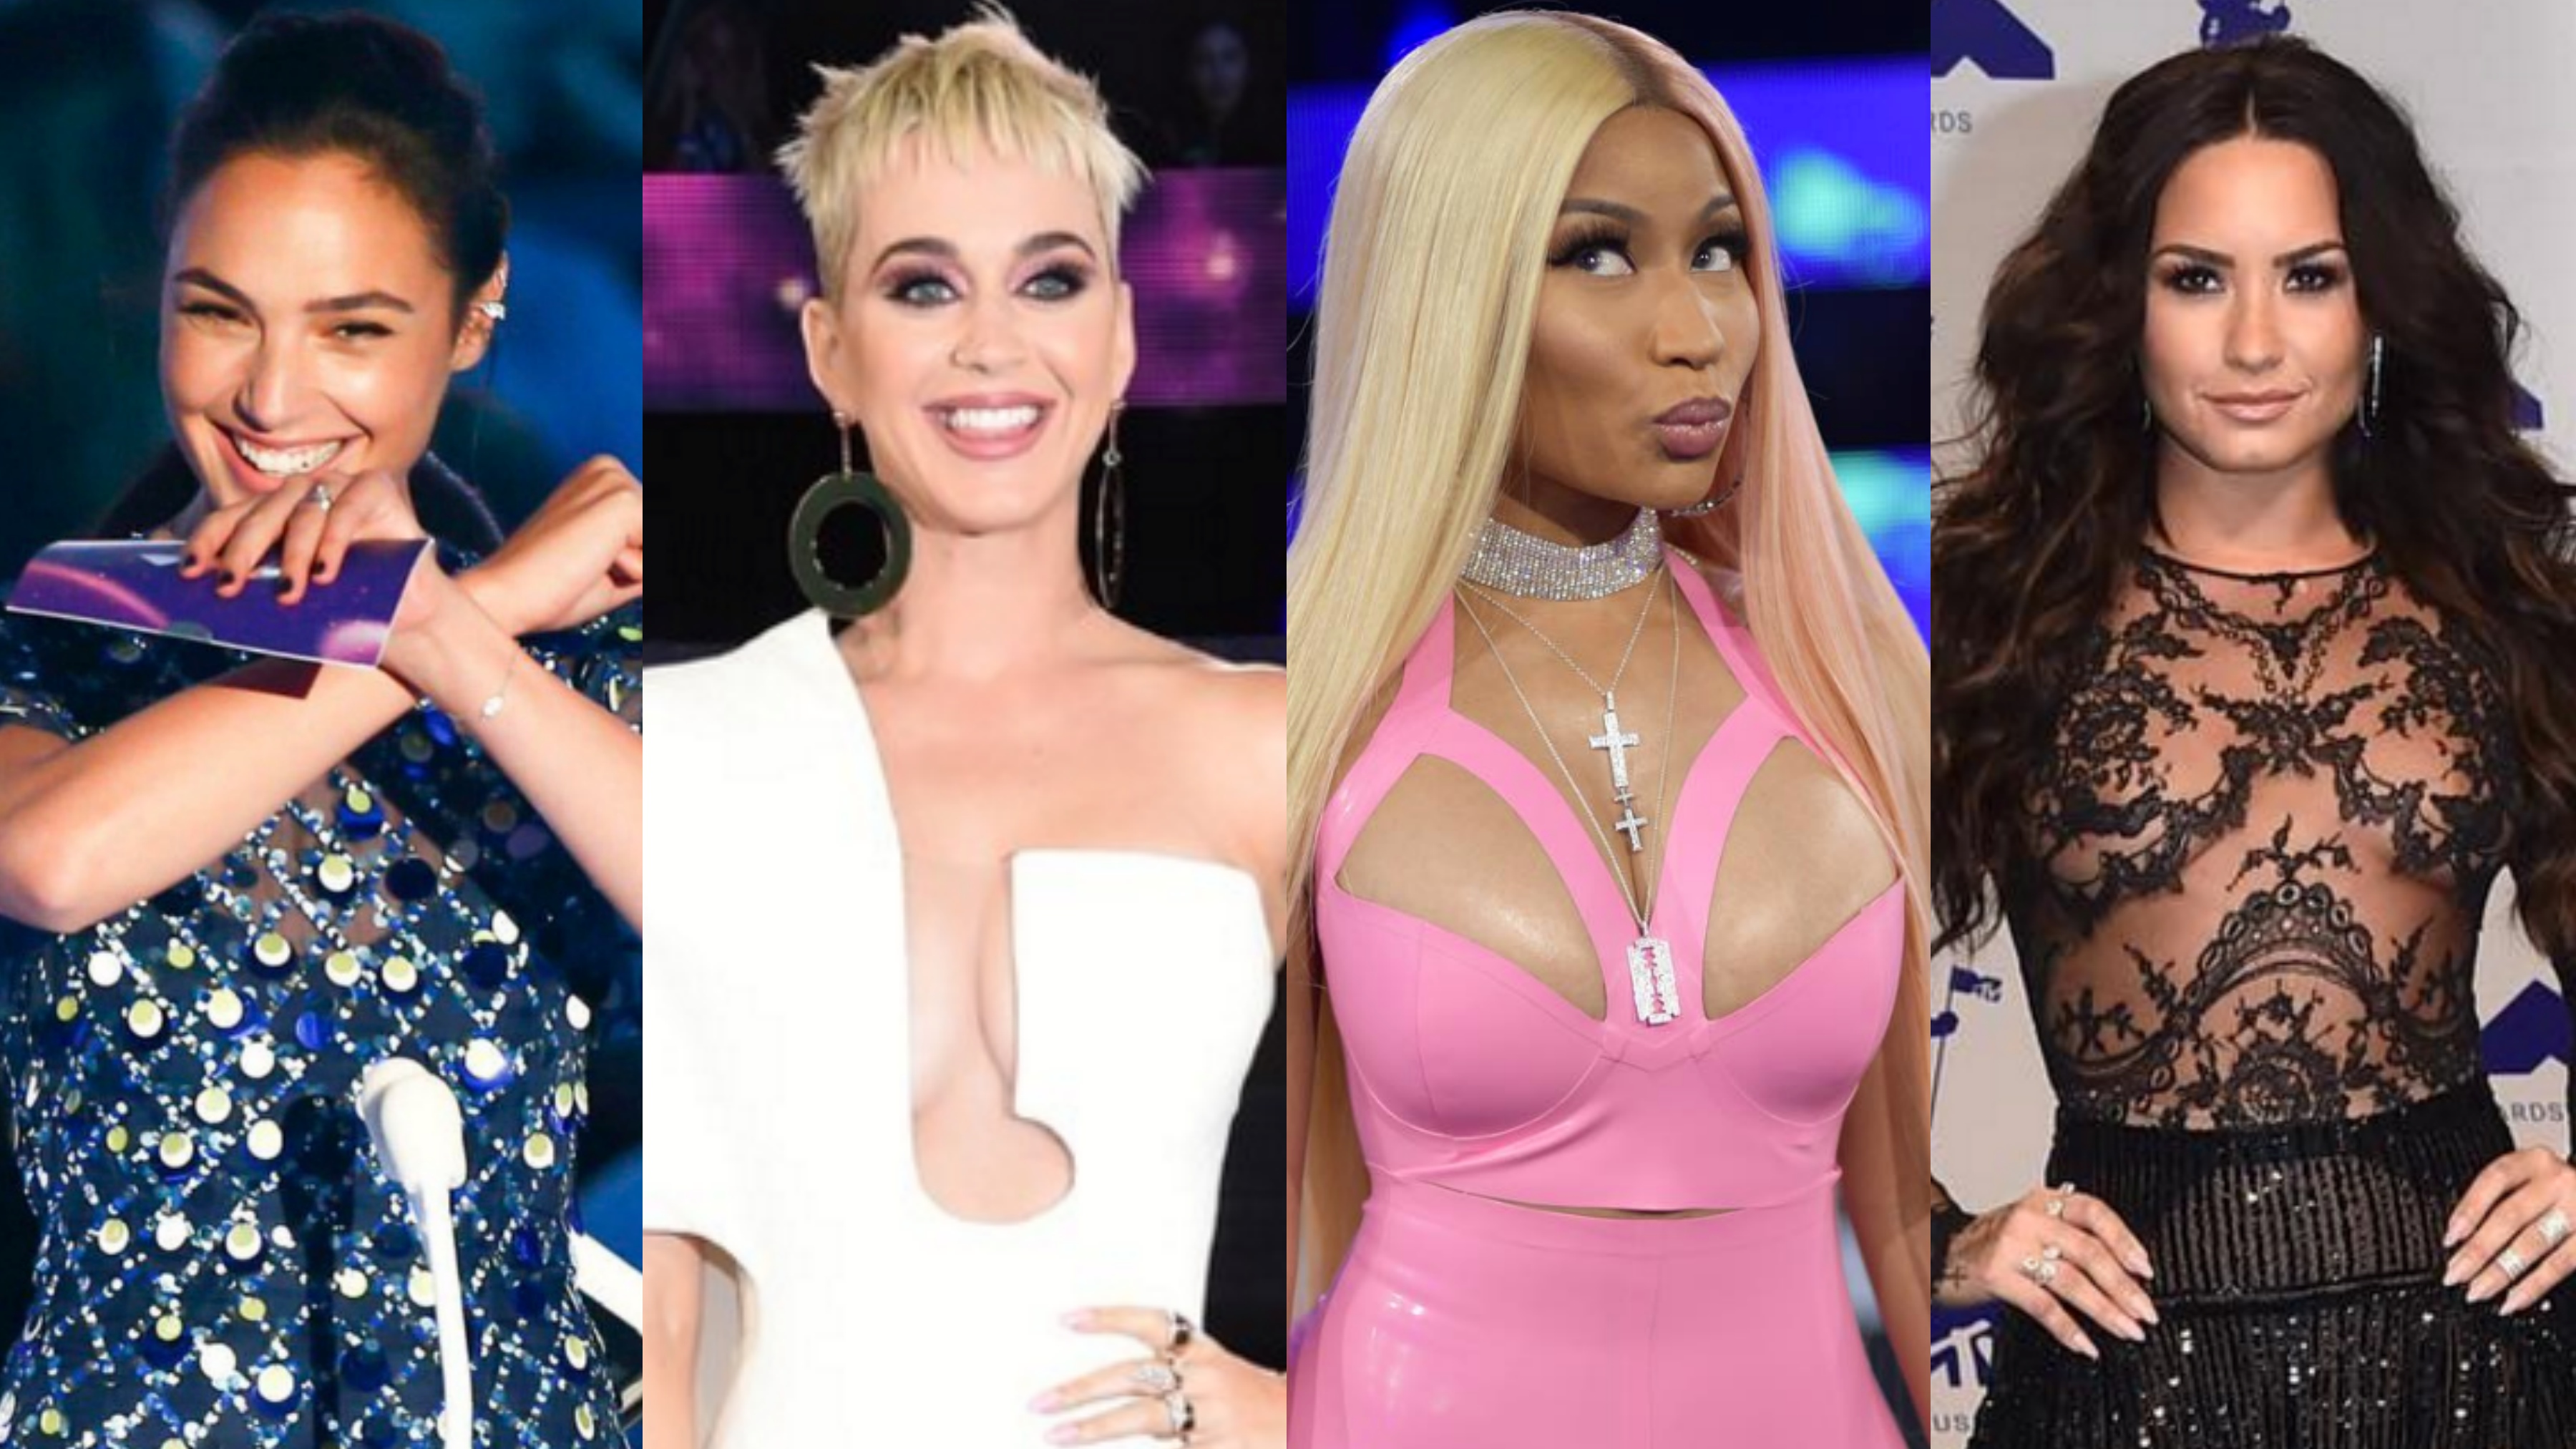 MTV VMAS 2017. Gal Gadot, Katy Perry, Nicki Minaj, and Demi Lovato shine at the MTV Video Music Awards 2017. Screengrabs from Instagram/@mtv/Twitter/@galgadot/@vmas 